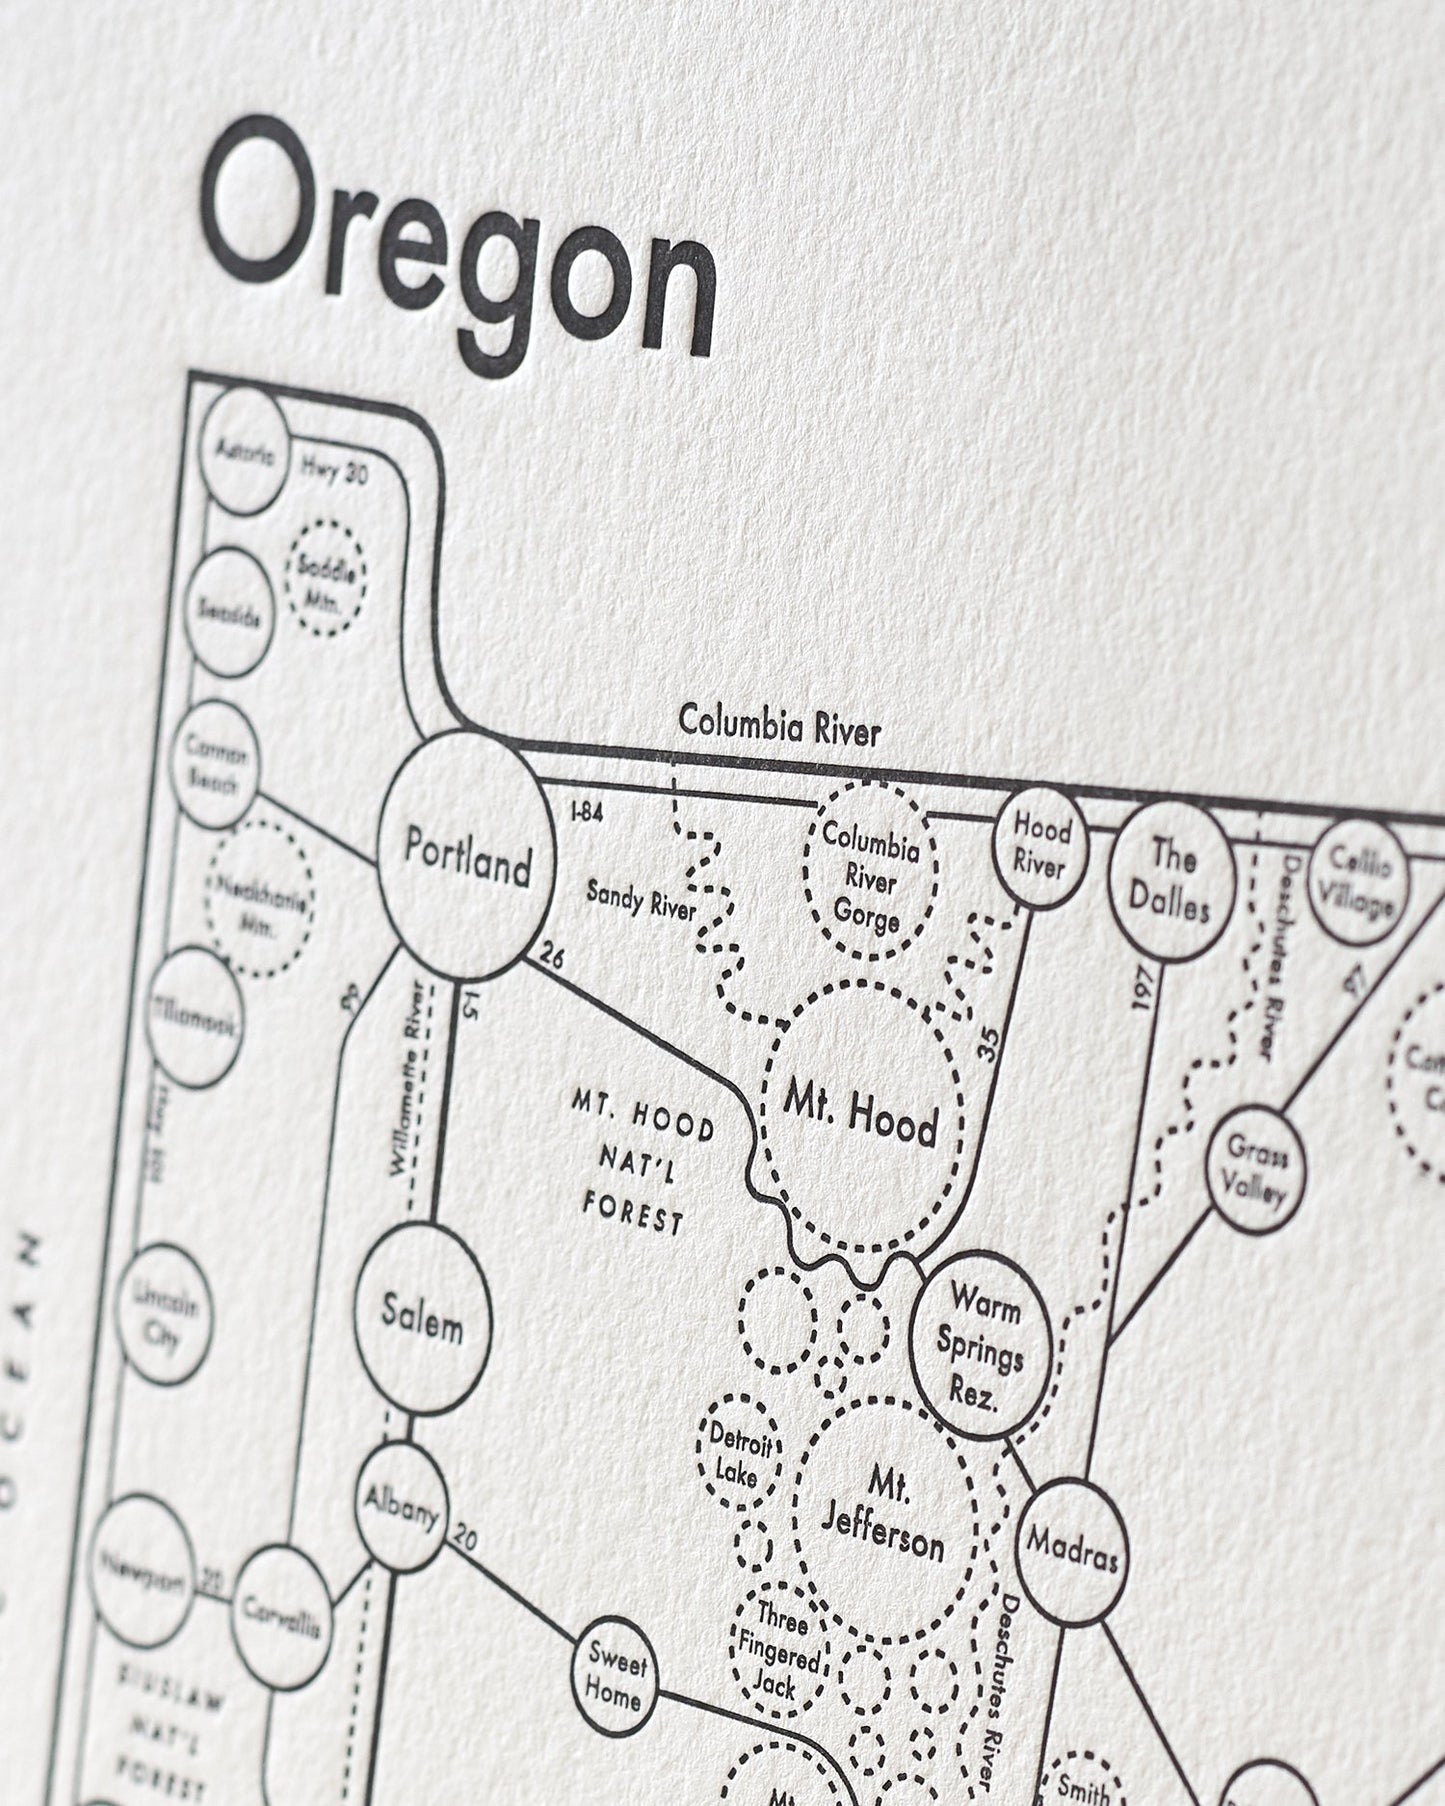 Oregon Letterpress Print